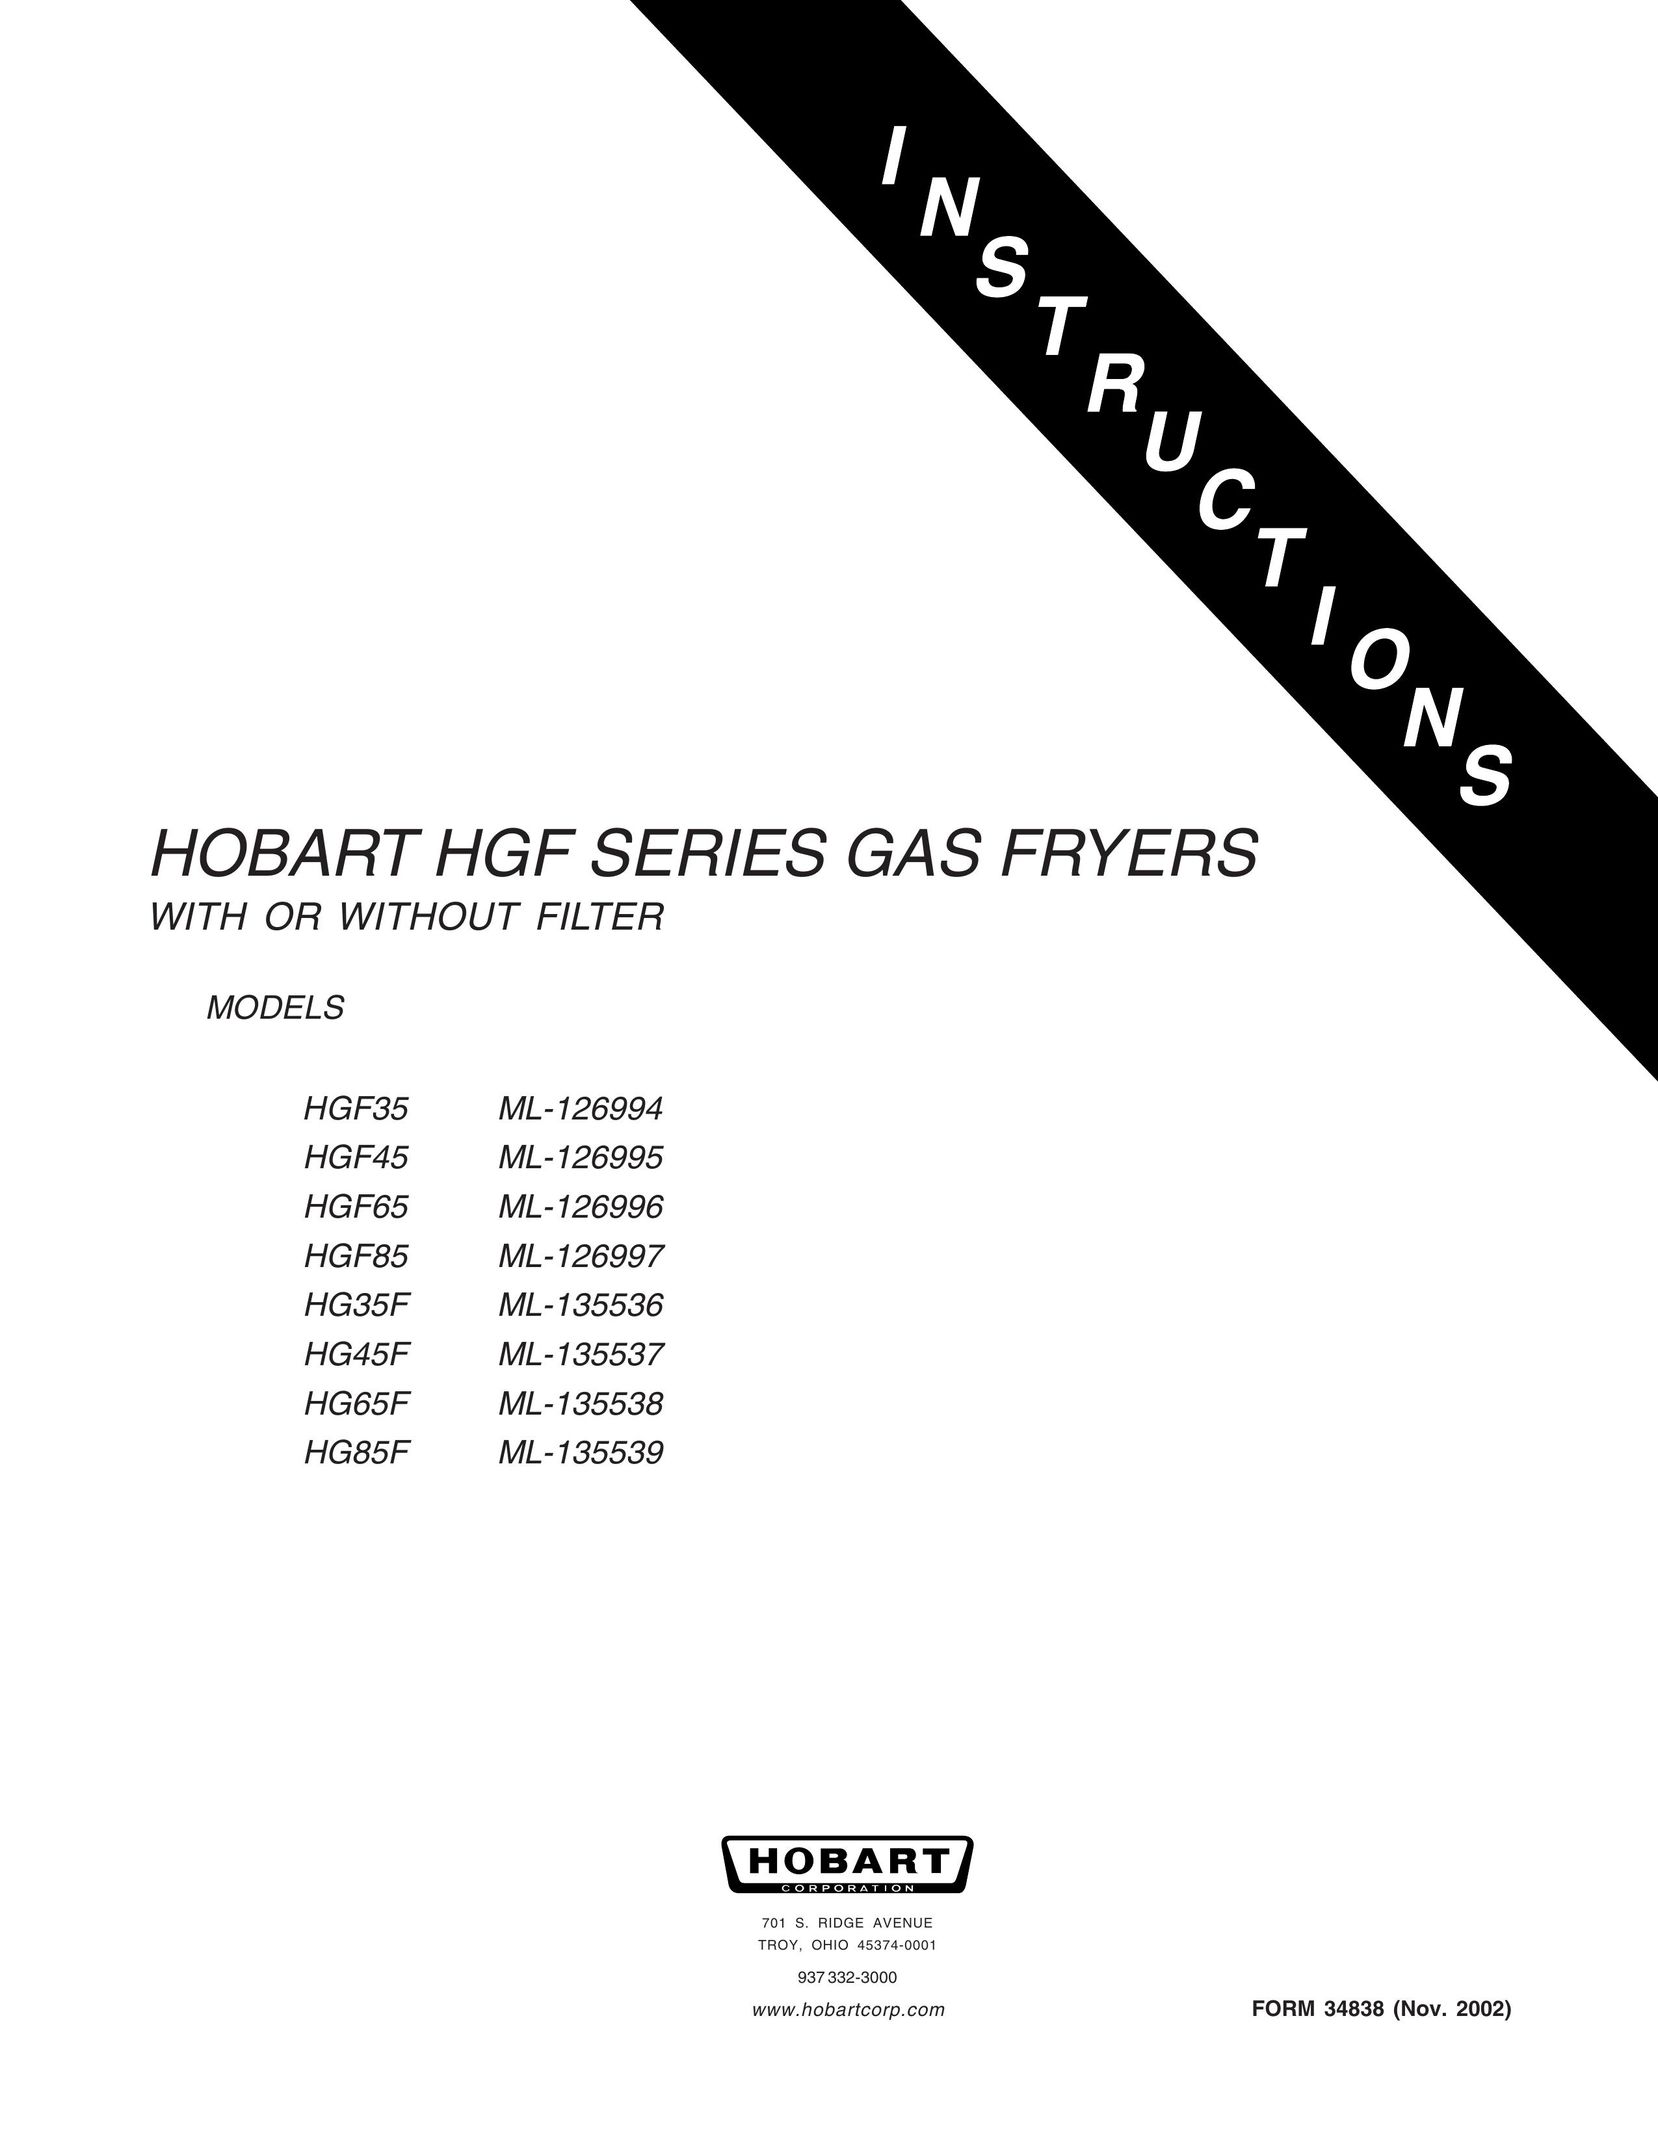 Hobart GF64F ML-135538 Fryer User Manual